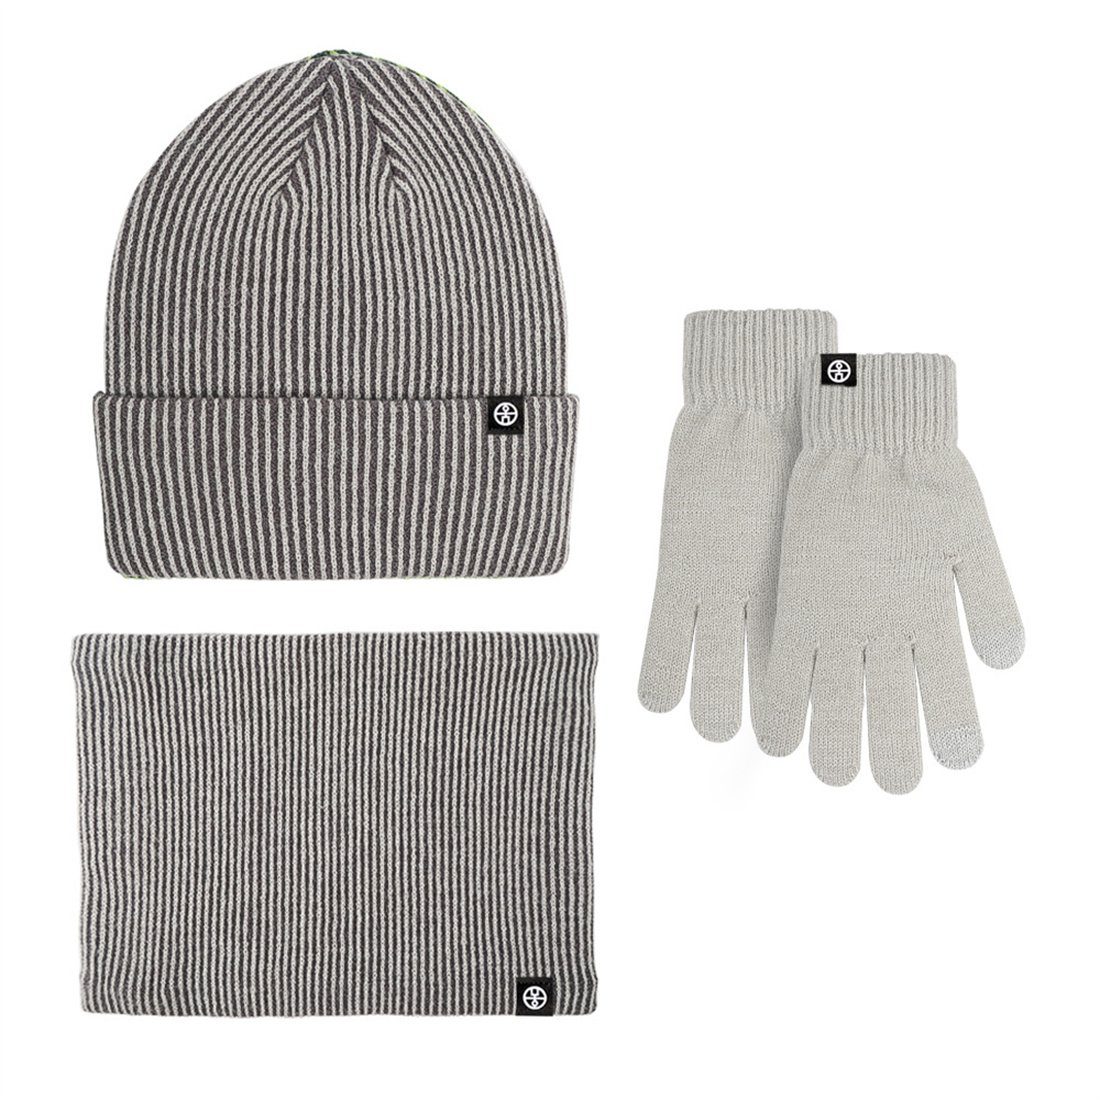 Grau Mütze DÖRÖY Handschuhe + + Warmes Schal Strickmütze wattierte 3tlg. Unisex-Winterset,